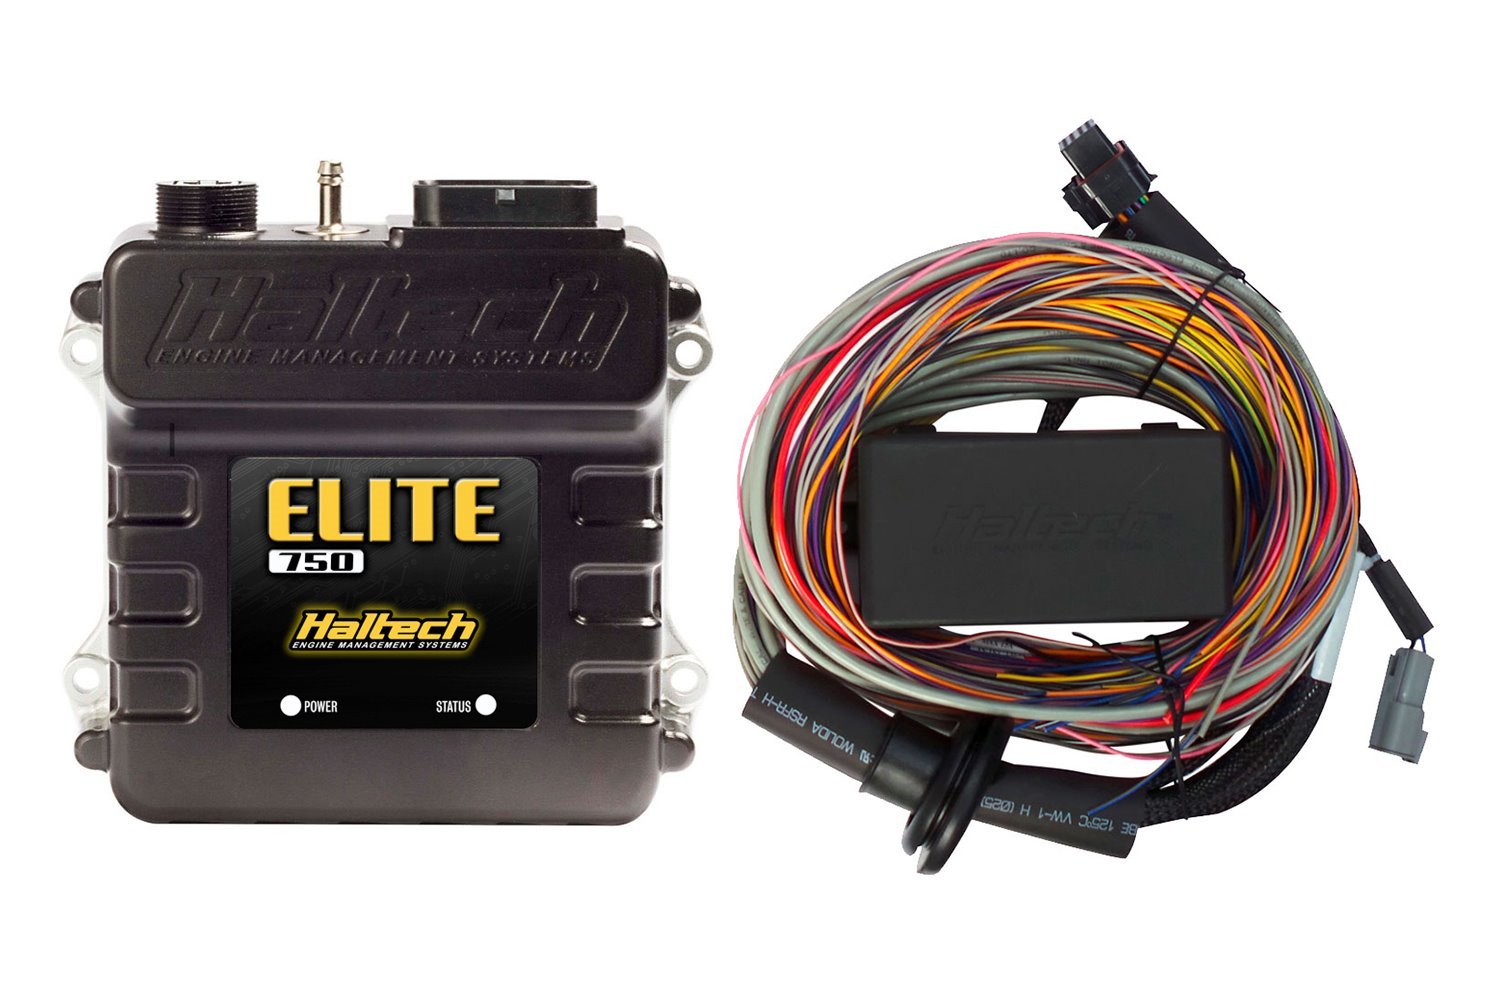 HT-150604 Elite 750 + Premium Universal Wire-in Harness Kit, 2.5m (8')